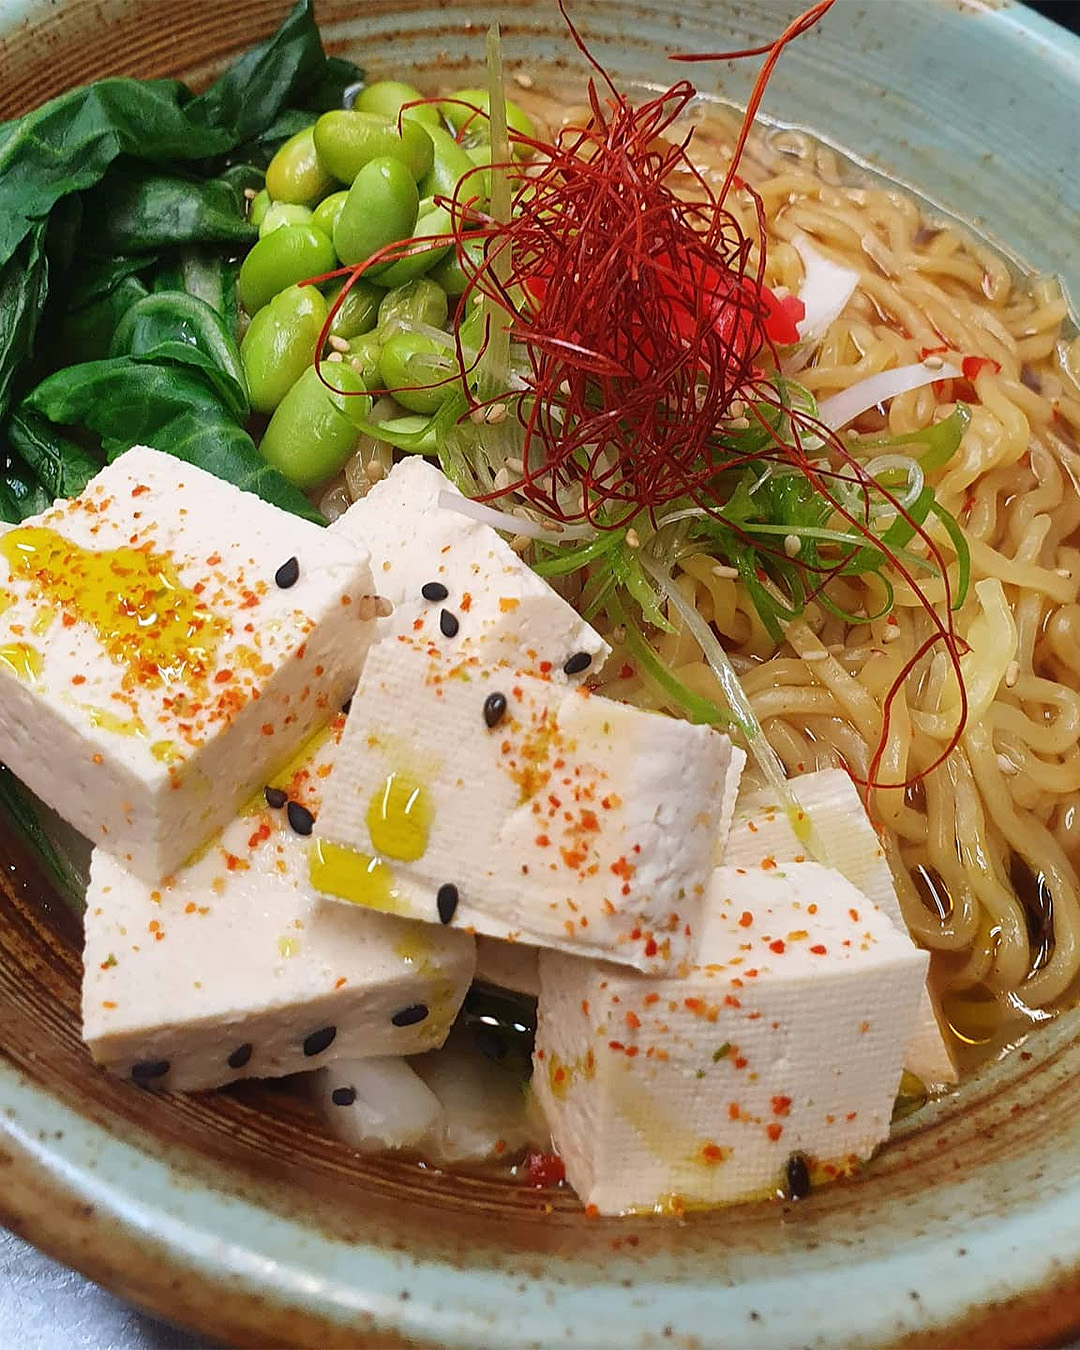 The Vegan spicy miso tofu ramen at Jizo Japanese Restaurant